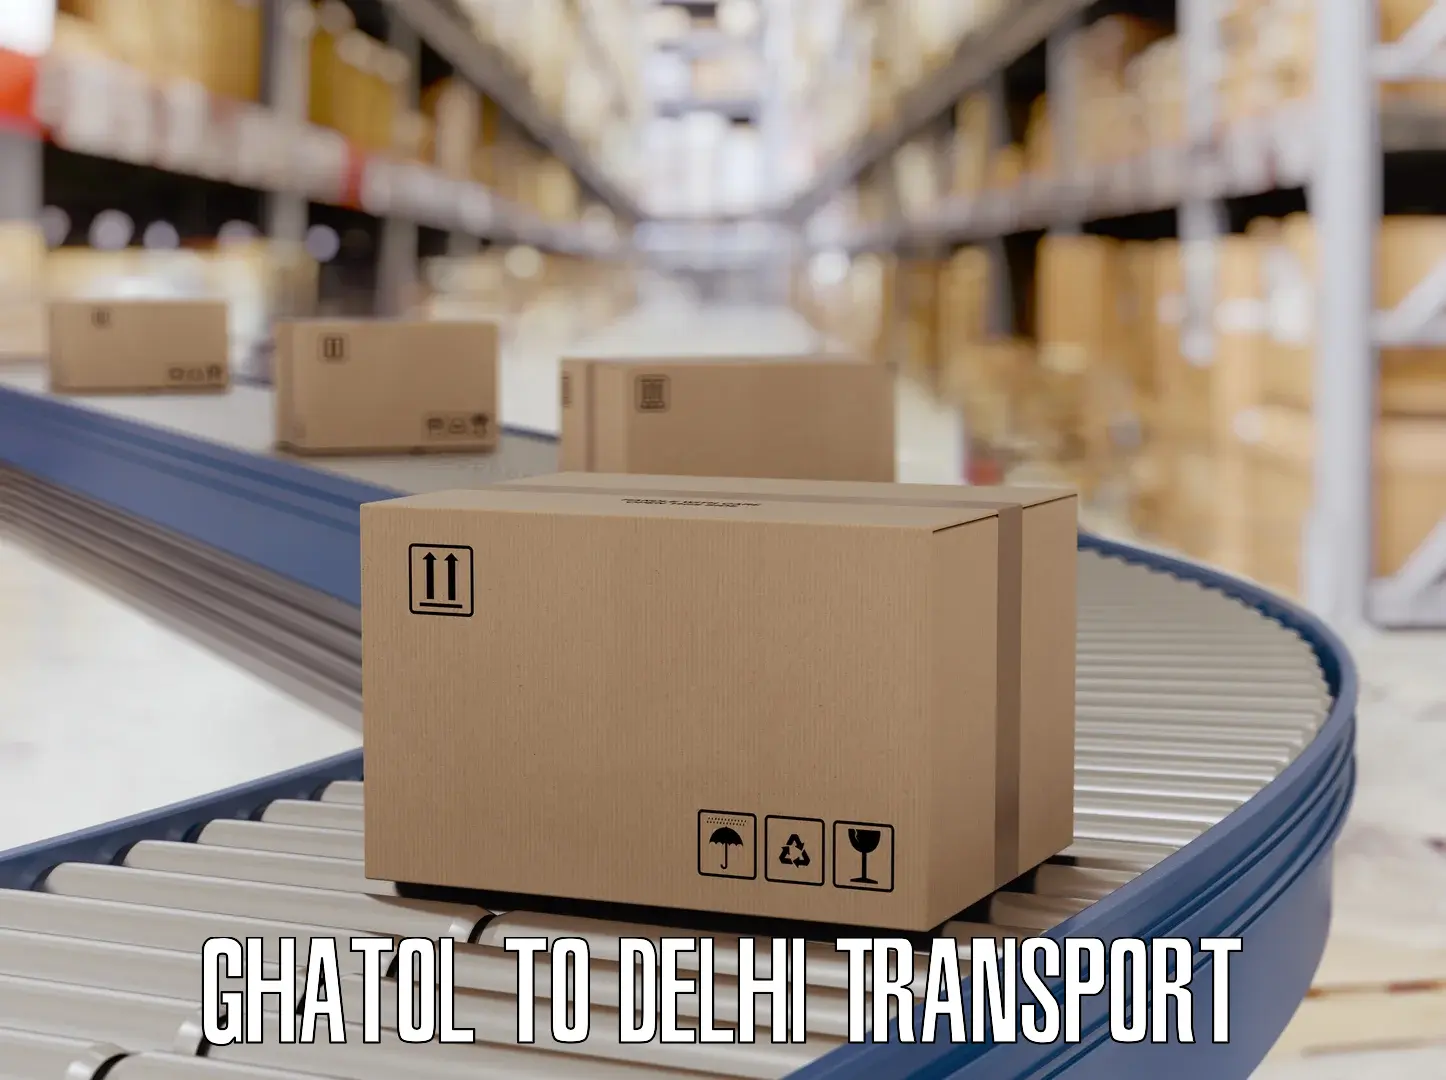 Online transport service Ghatol to East Delhi